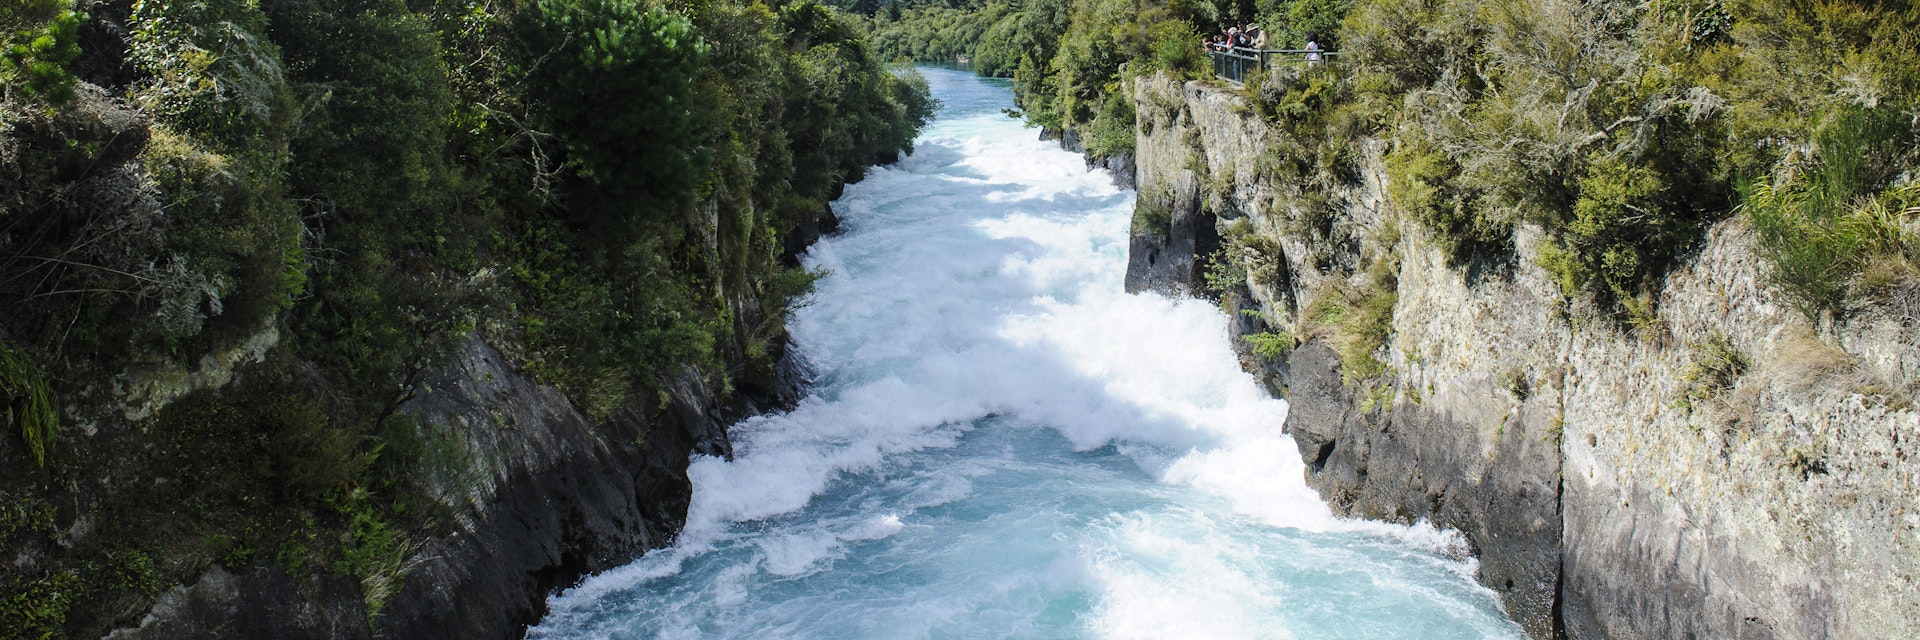 Narrow chasm leading in the Huka falls on the Waikato River, Taupo, North Island, New Zealand, Pacific